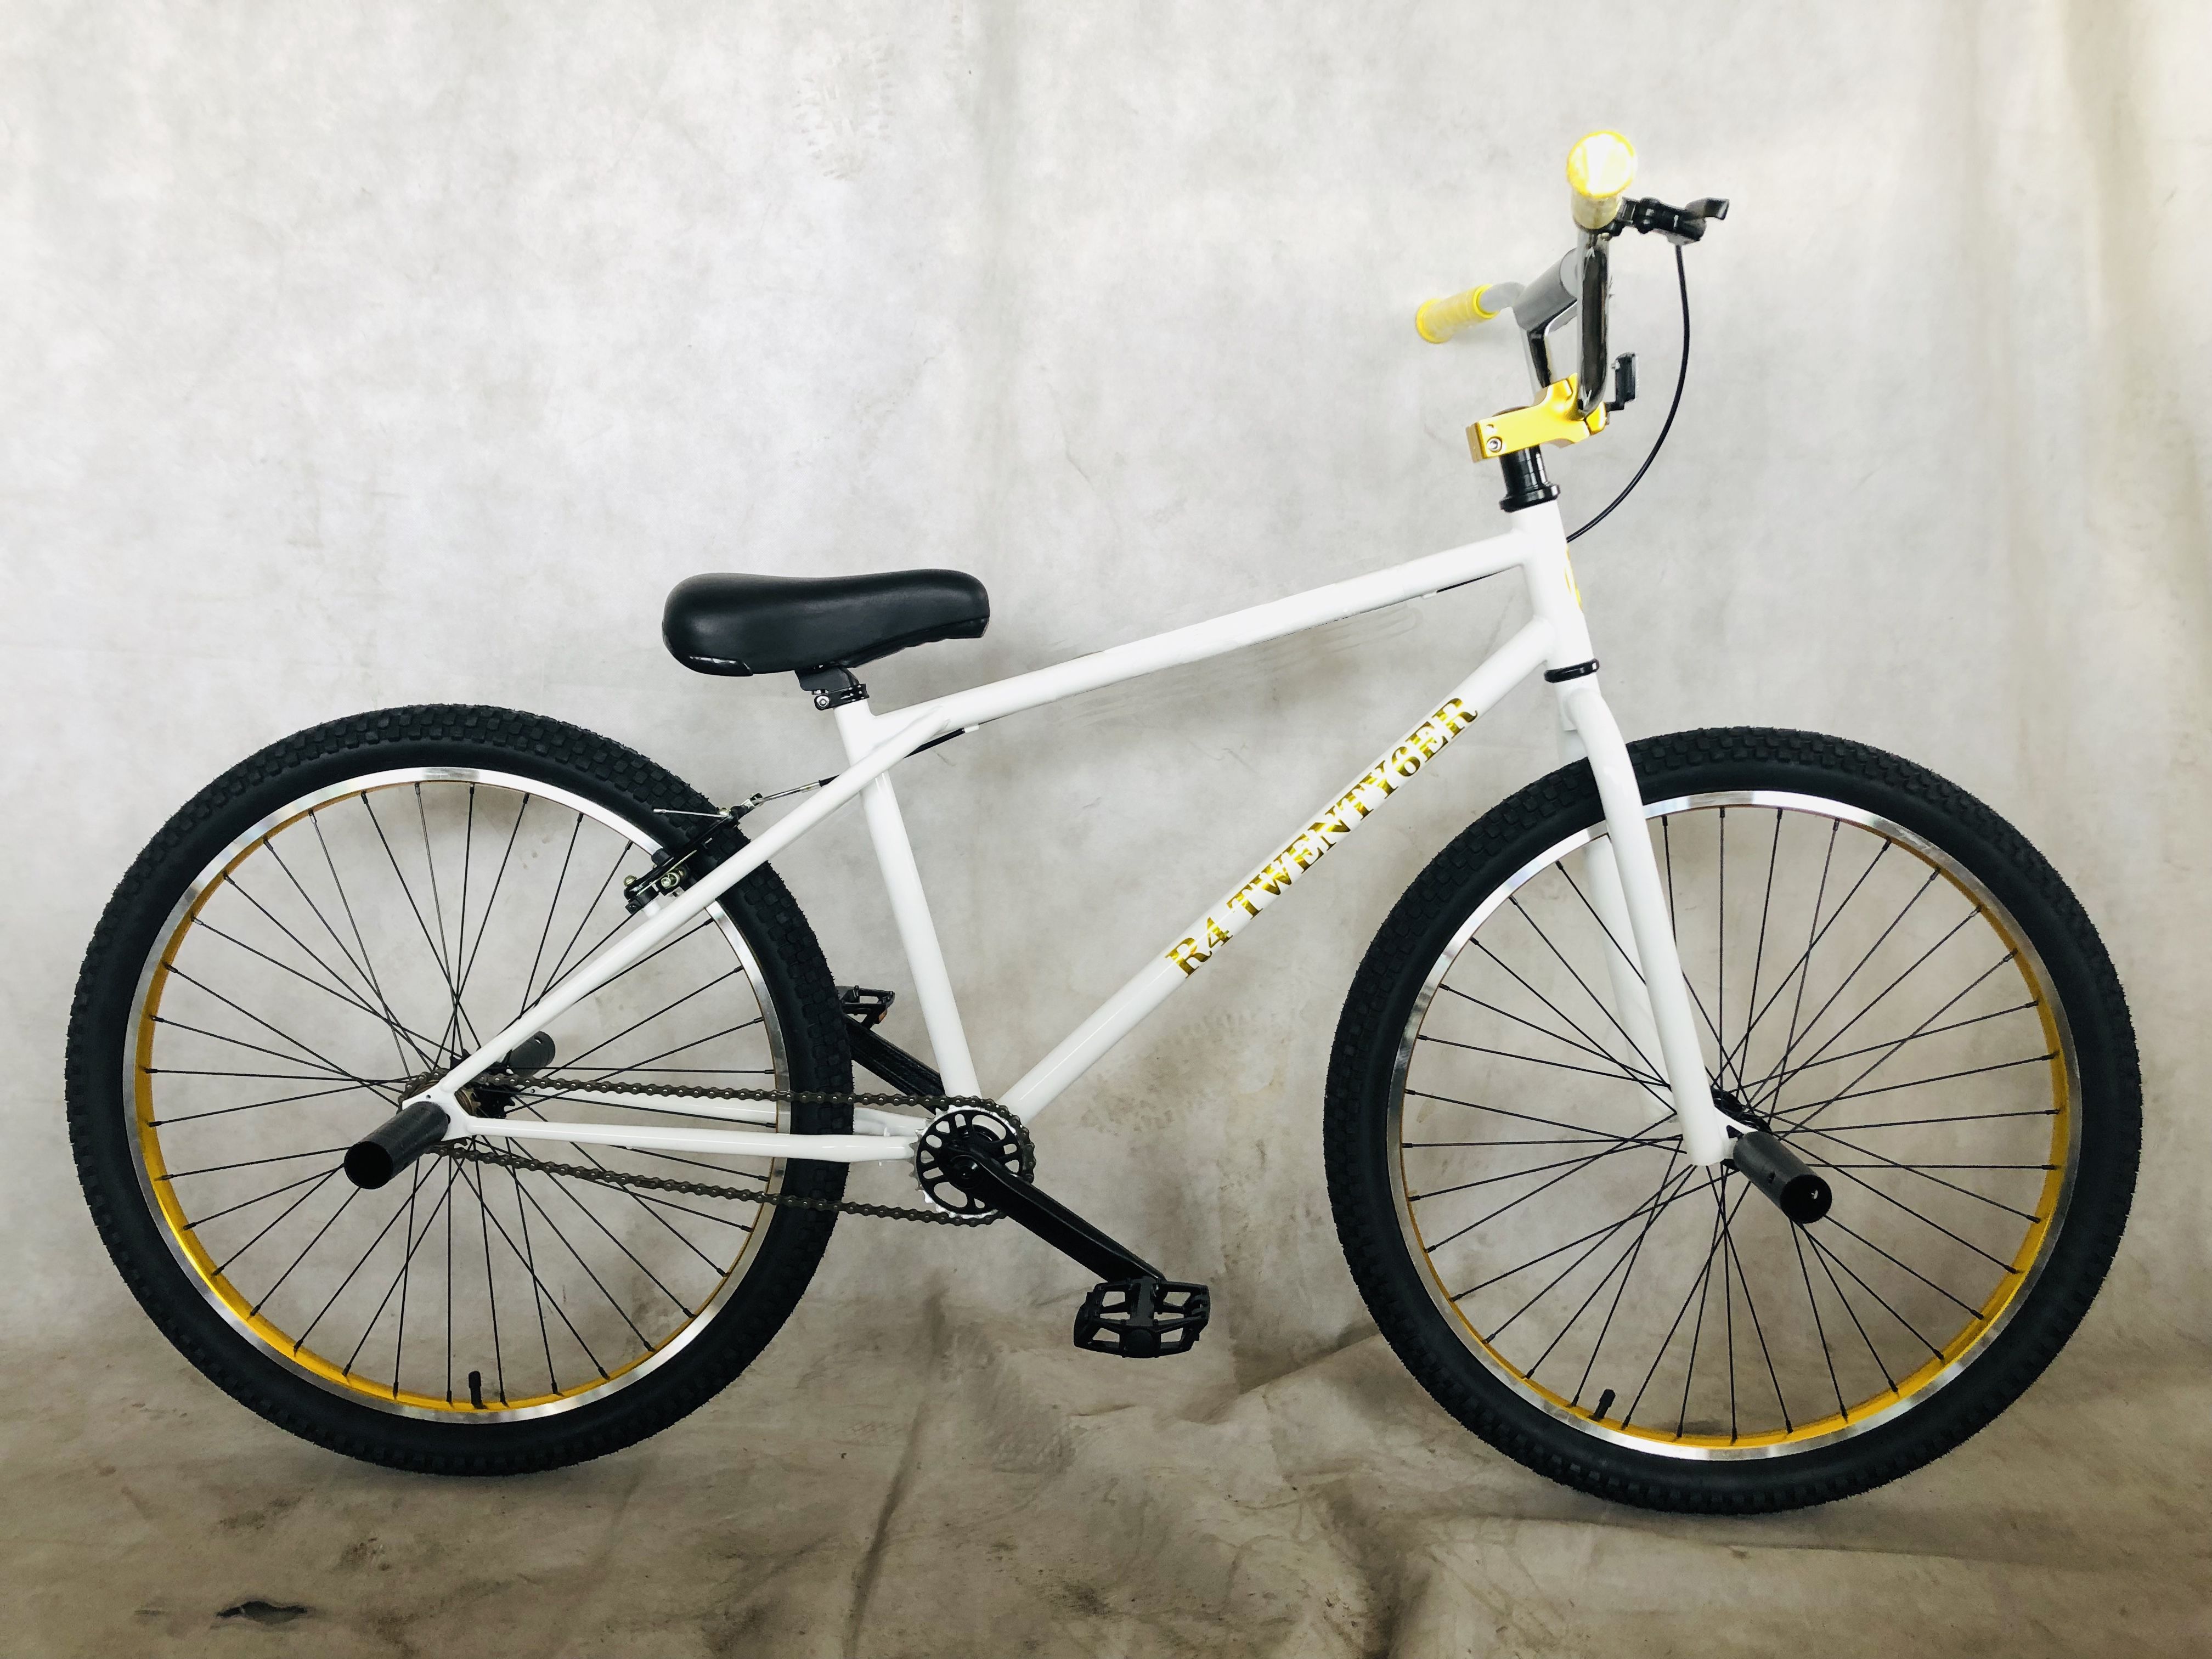 2020 R4 26" Complete BMX Bike Cruiser Bicycle W/ Stunt Pegs (White & Gold)